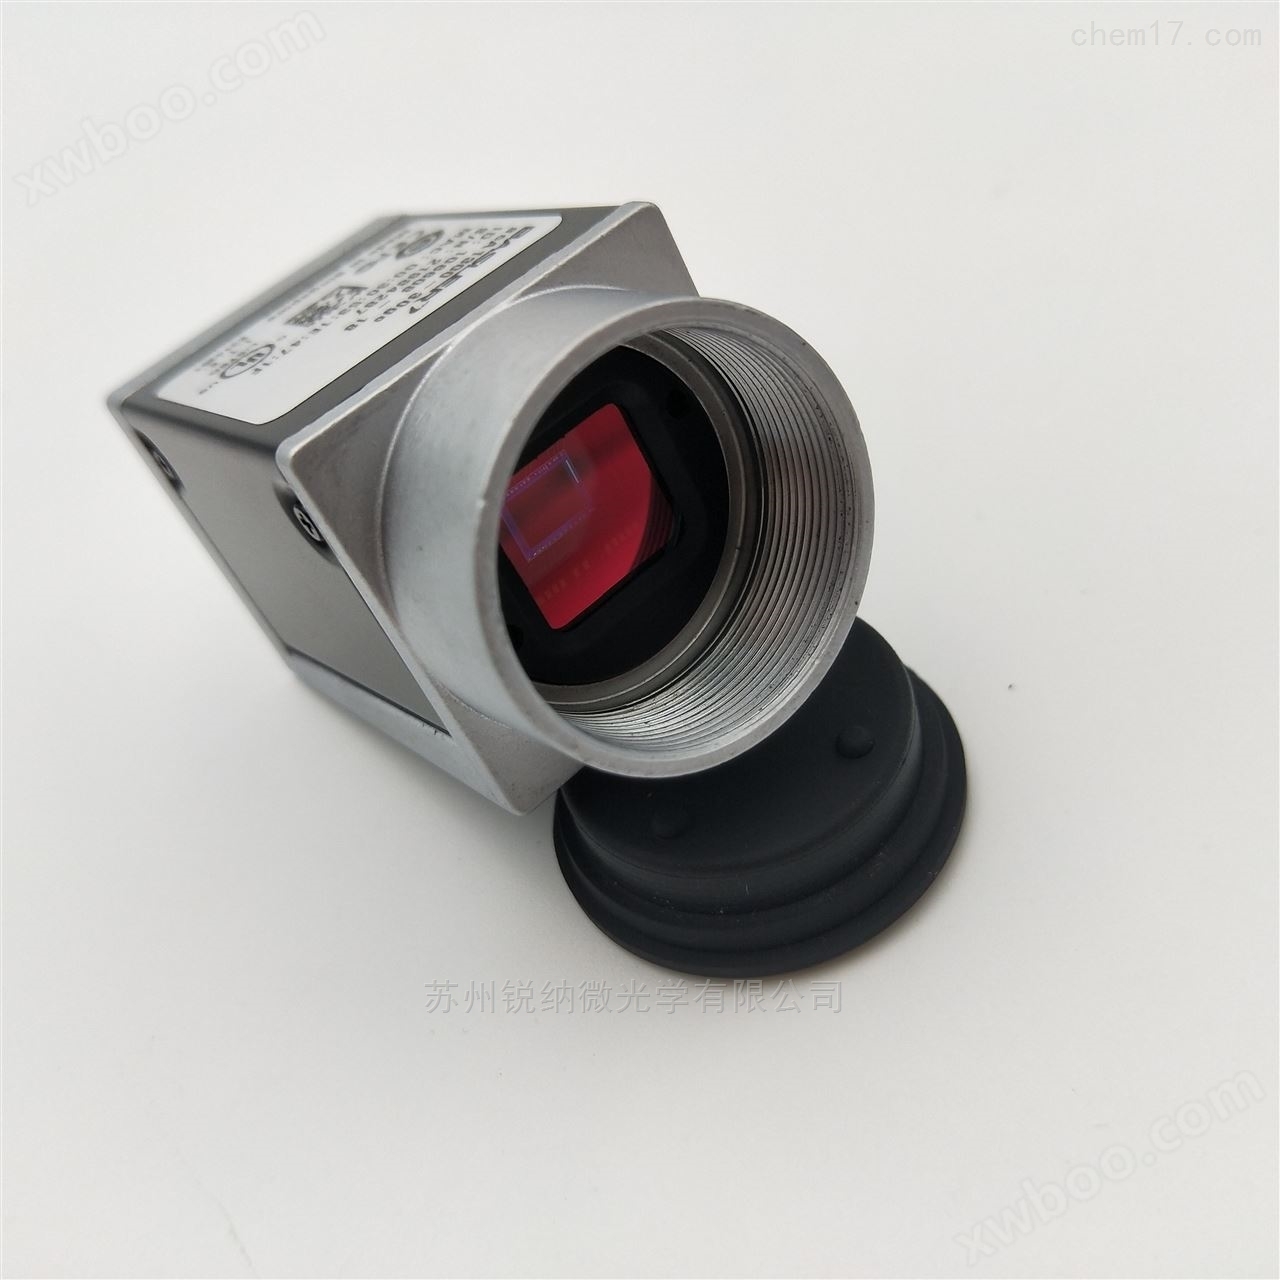 Basler acA1300-30gc 彩色CCD工业相机